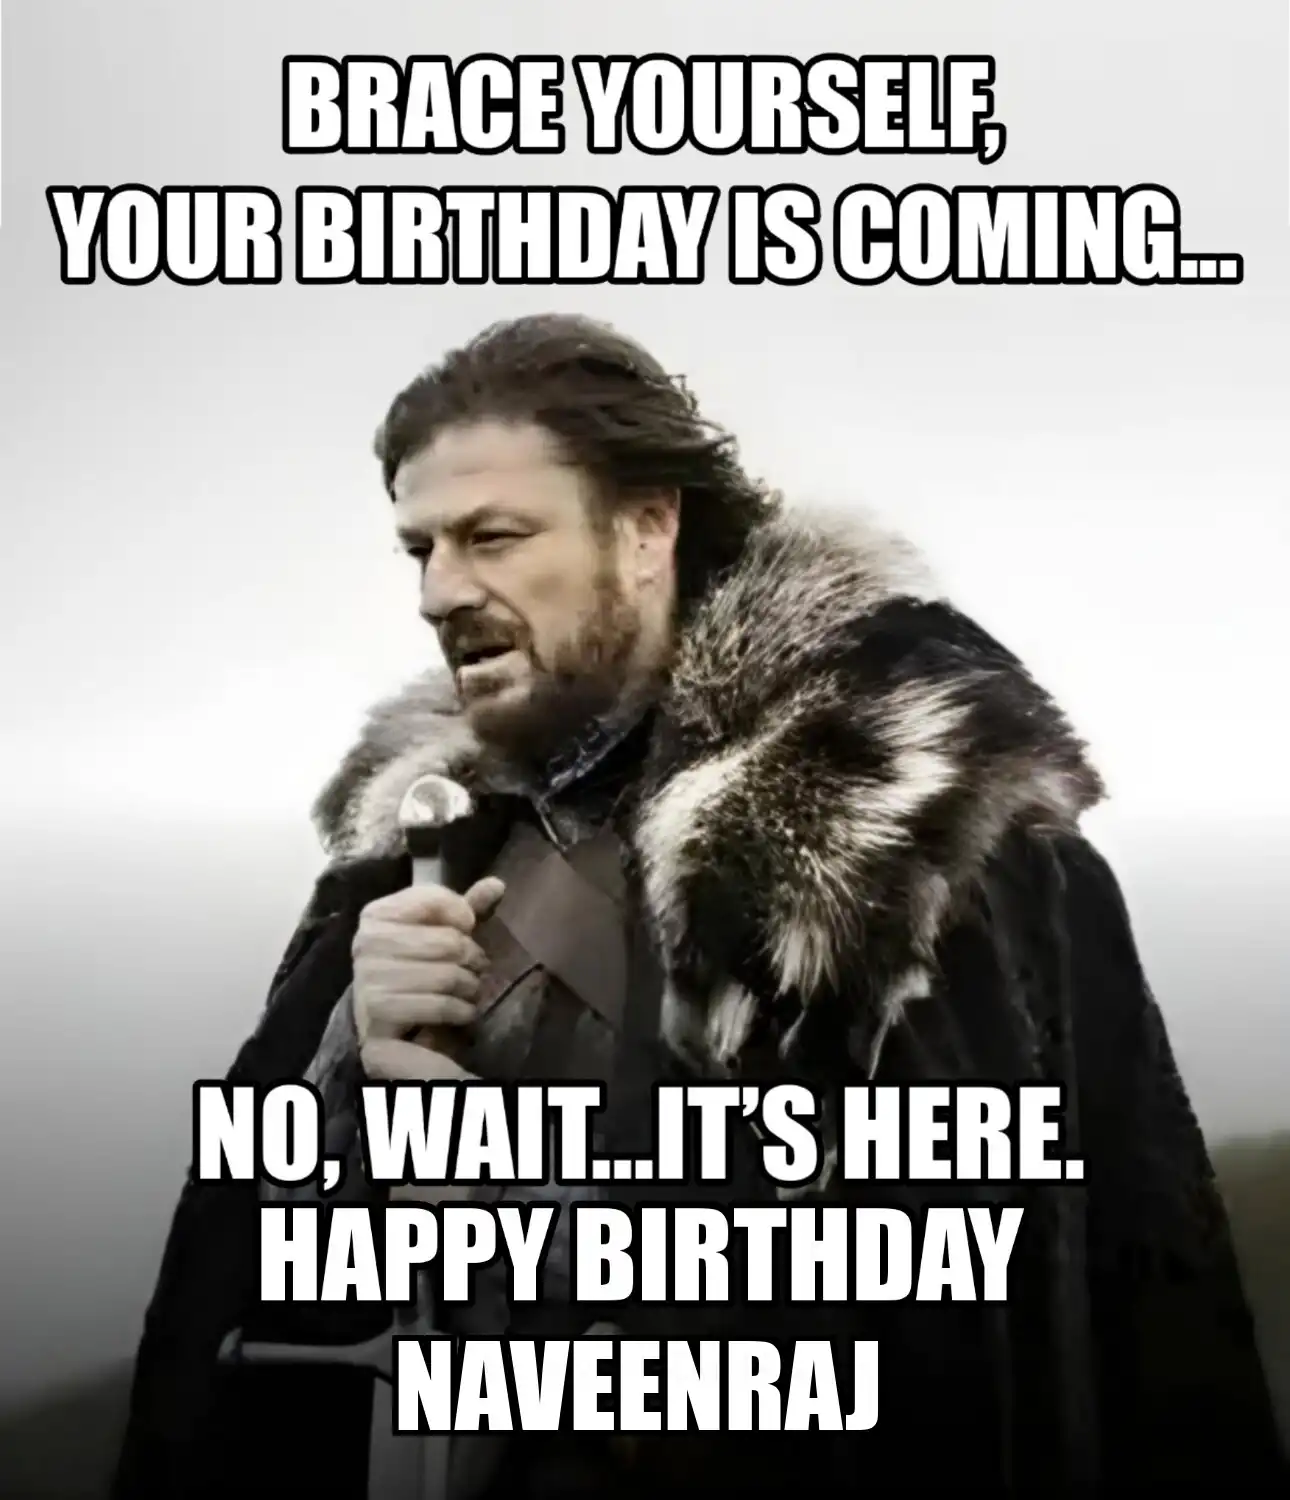 Happy Birthday Naveenraj Brace Yourself Your Birthday Is Coming Meme